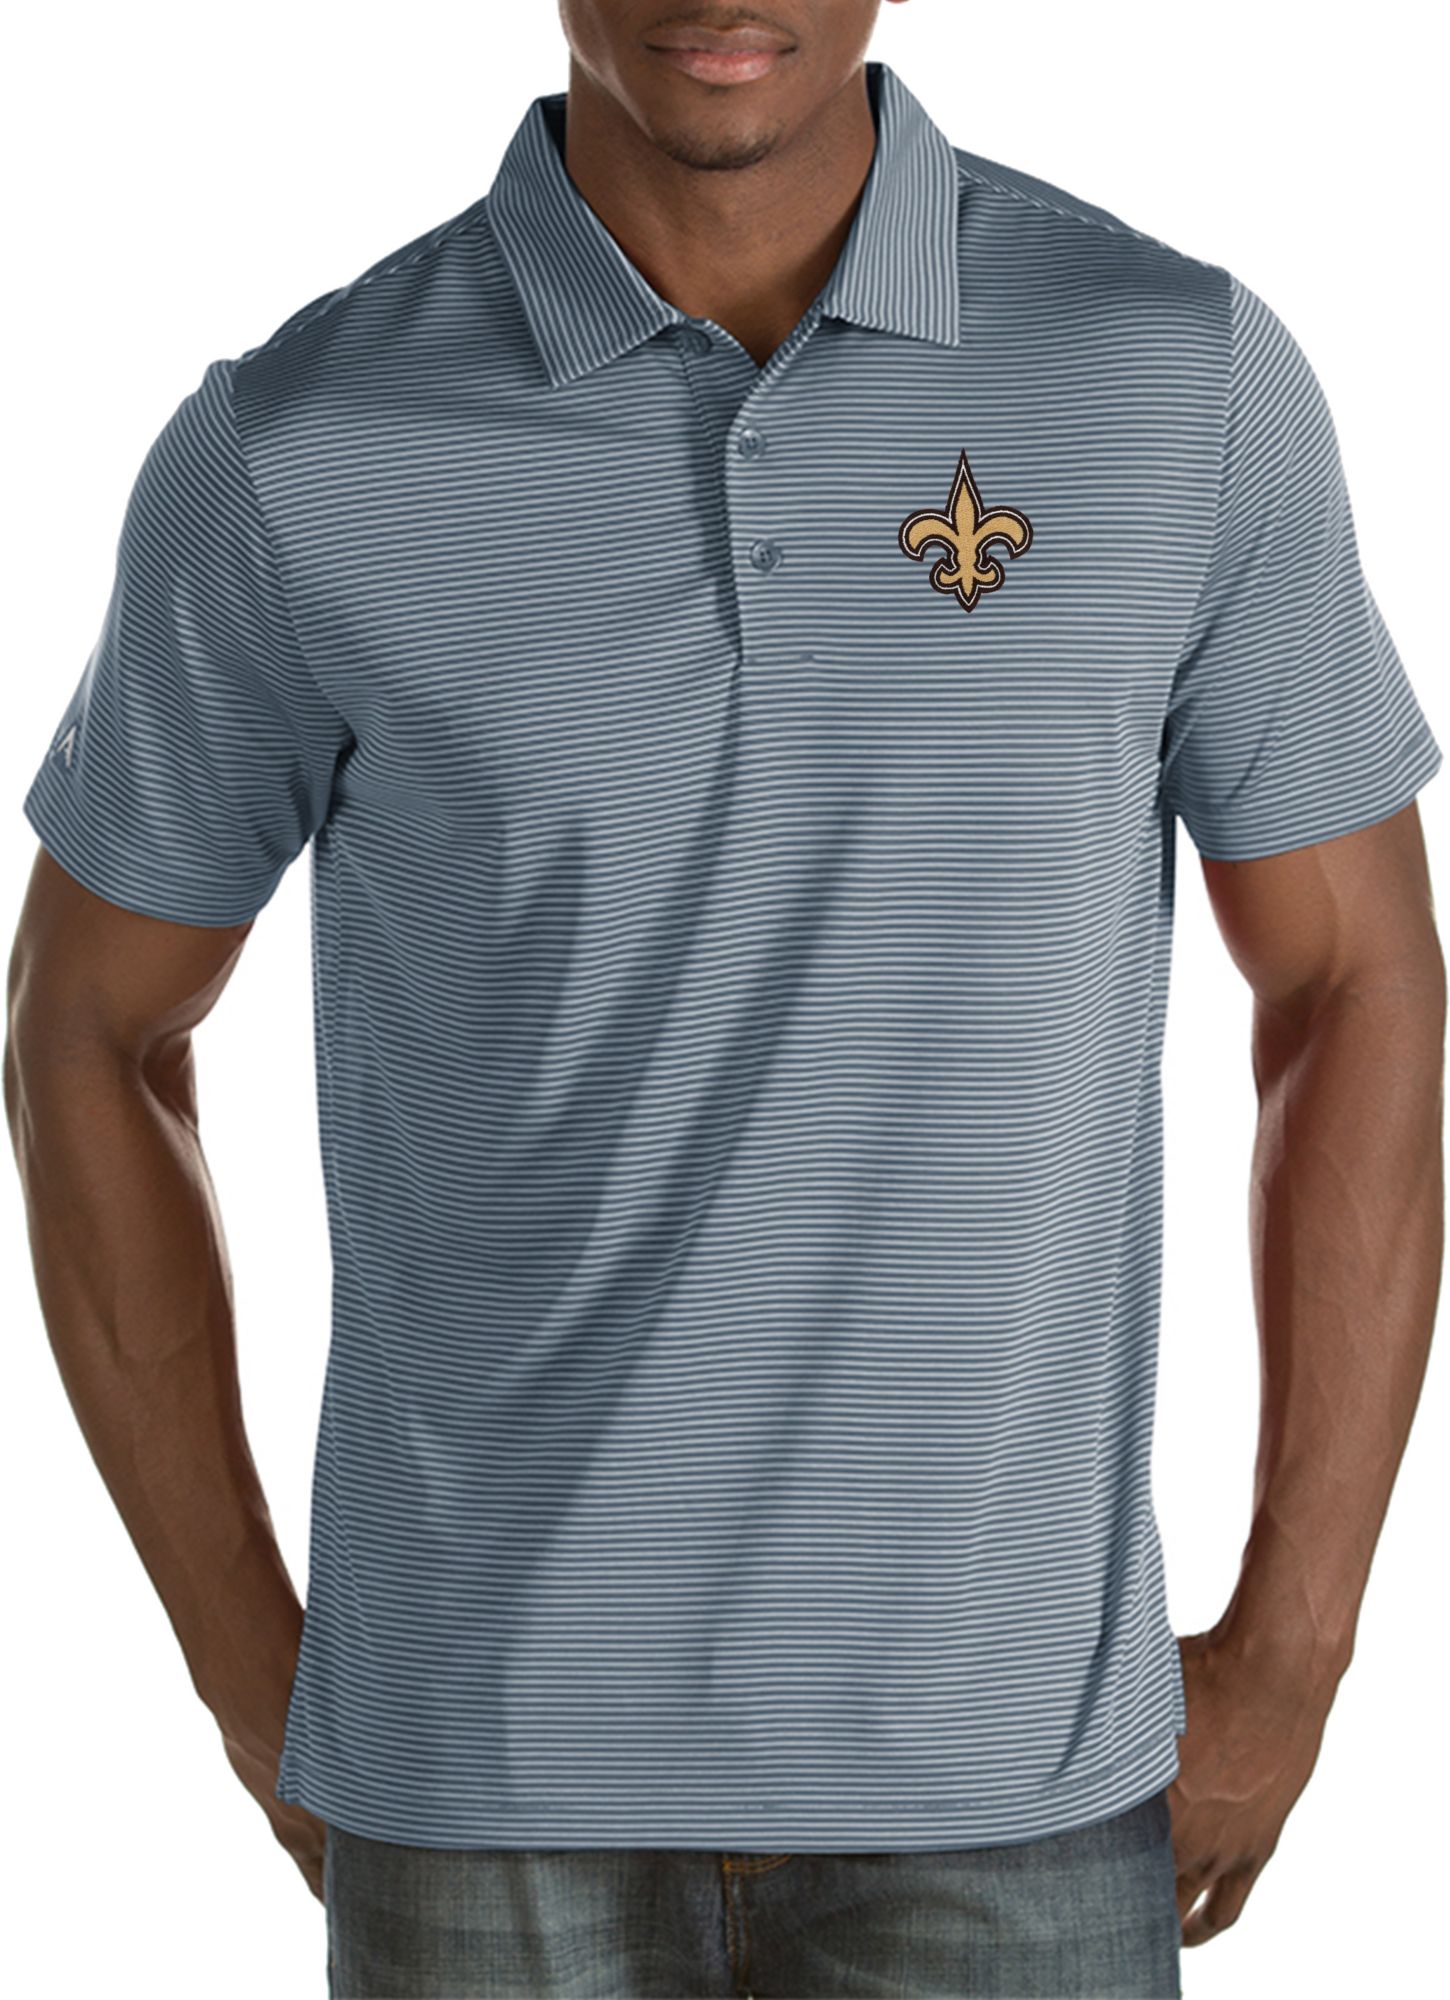 saints golf shirt